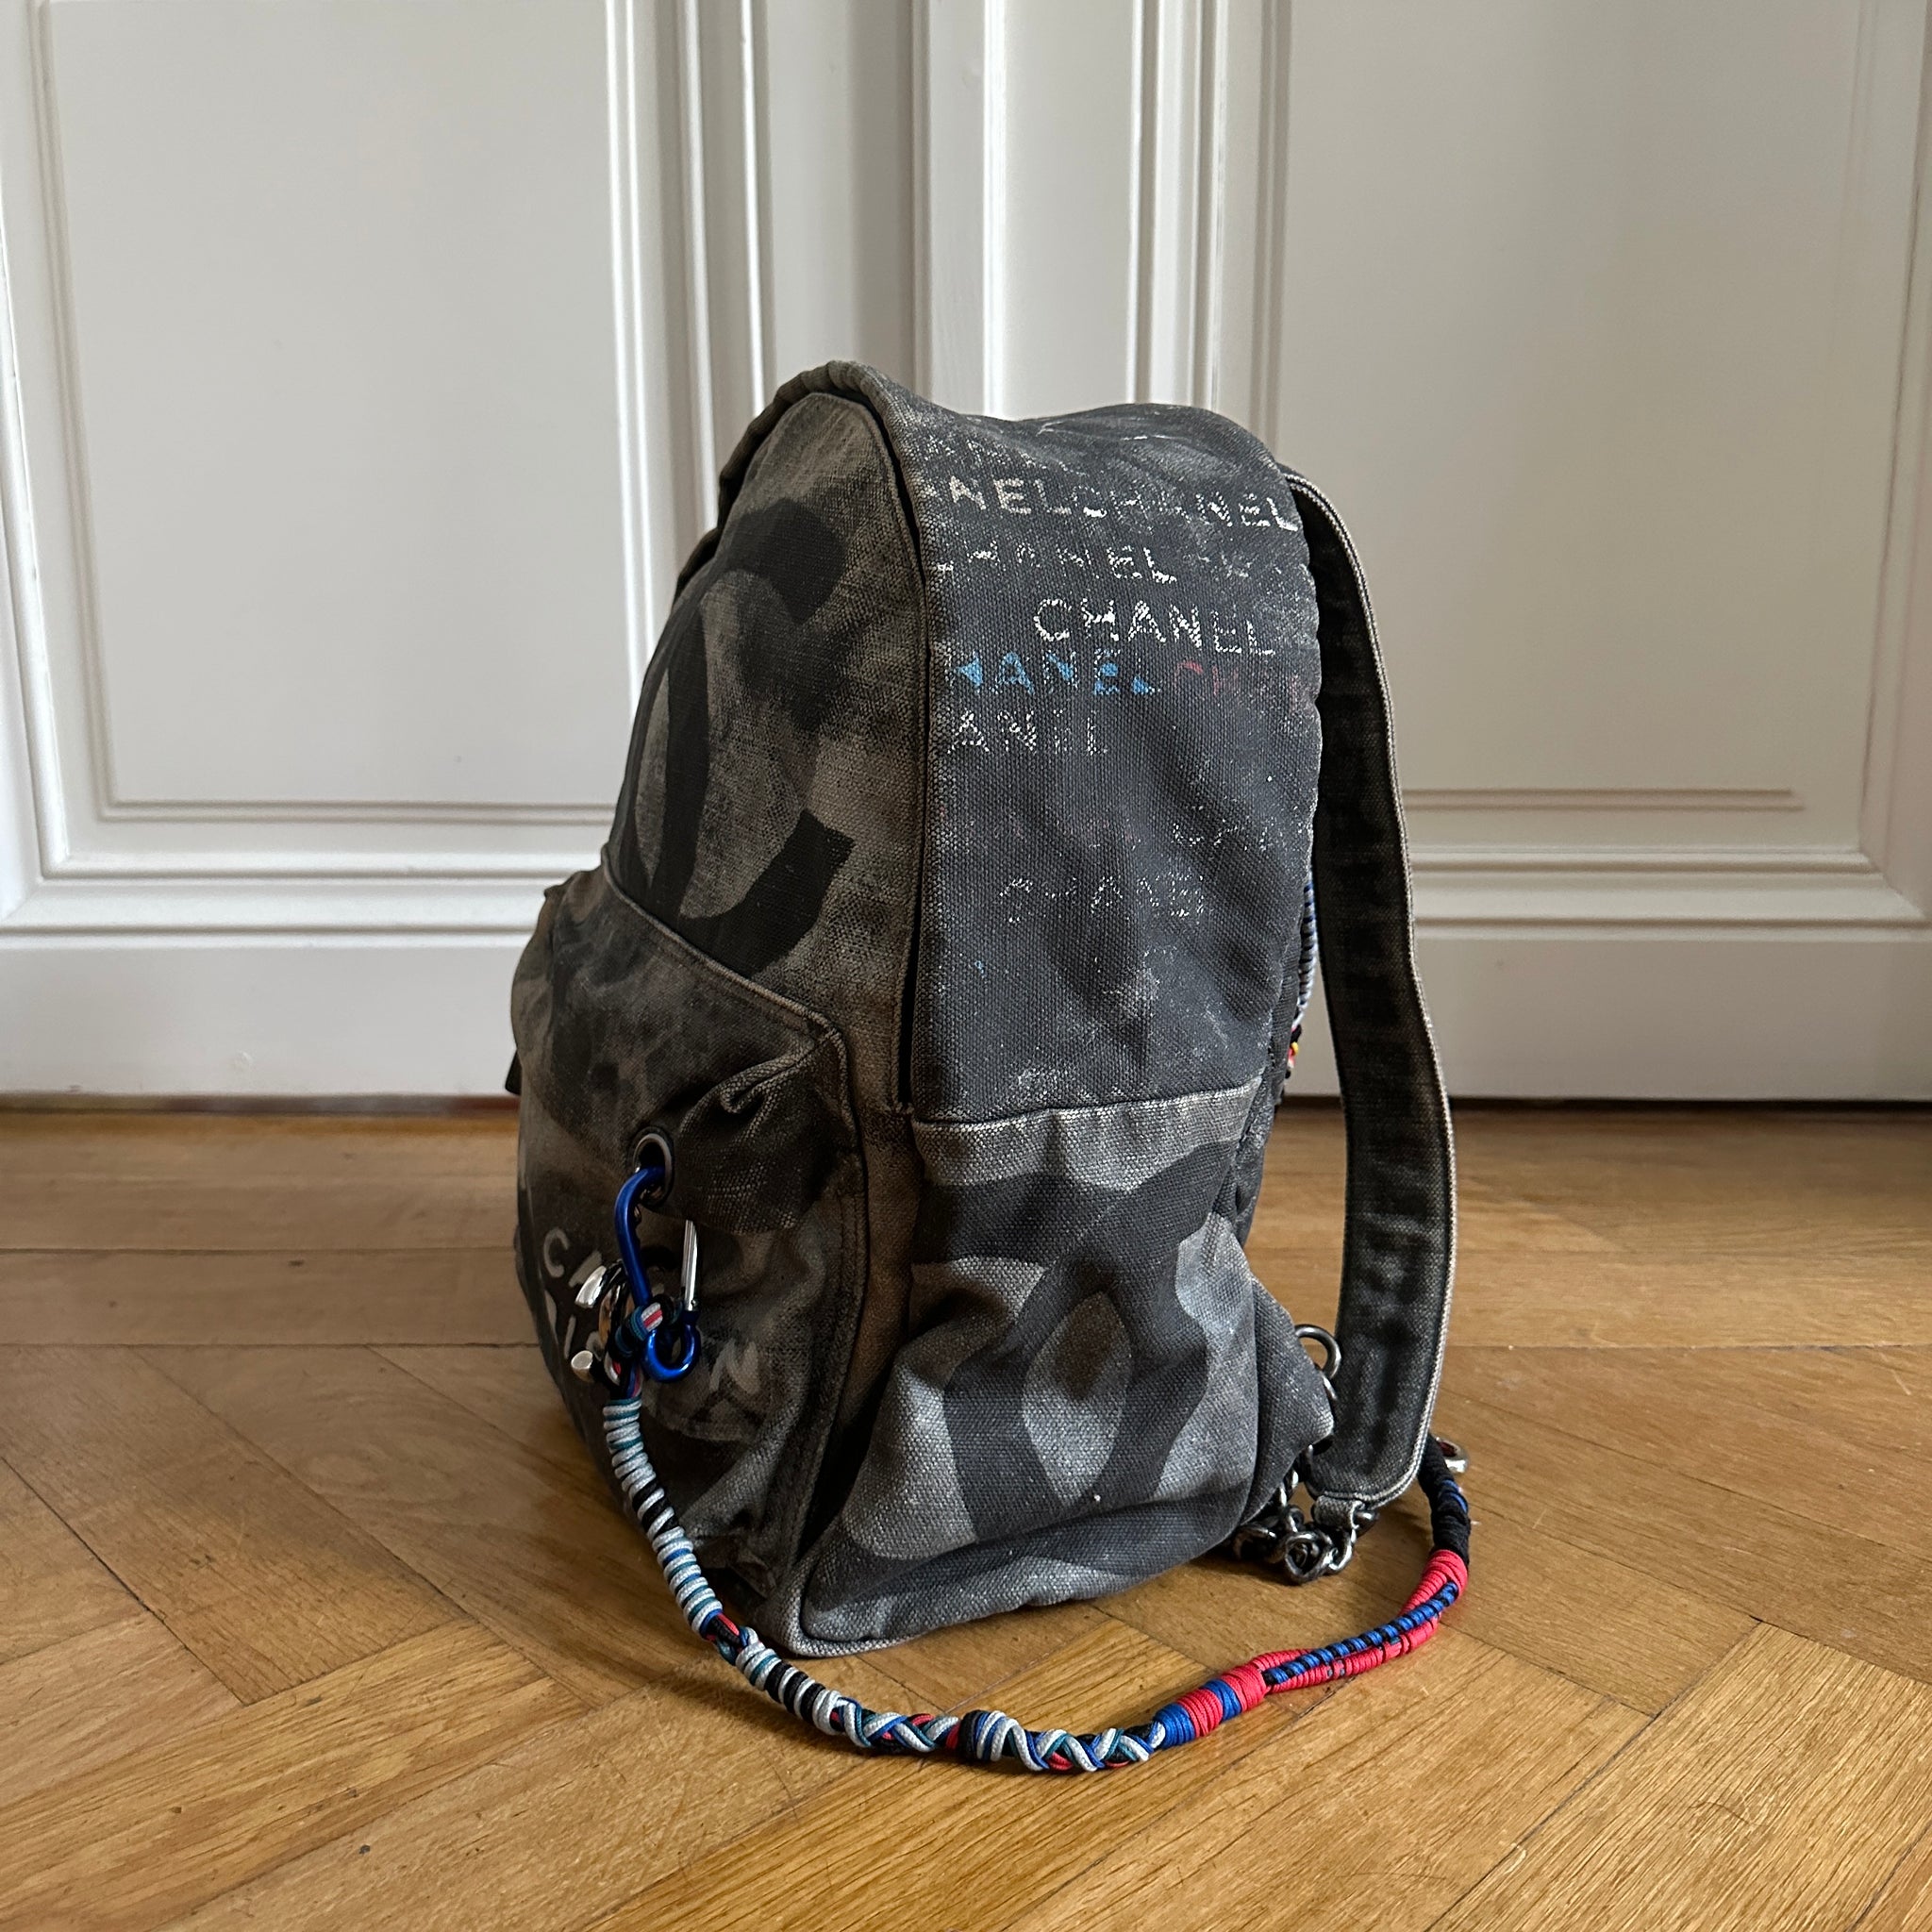 2014 Chanel Grey Painted Canvas Medium Graffiti Backpack